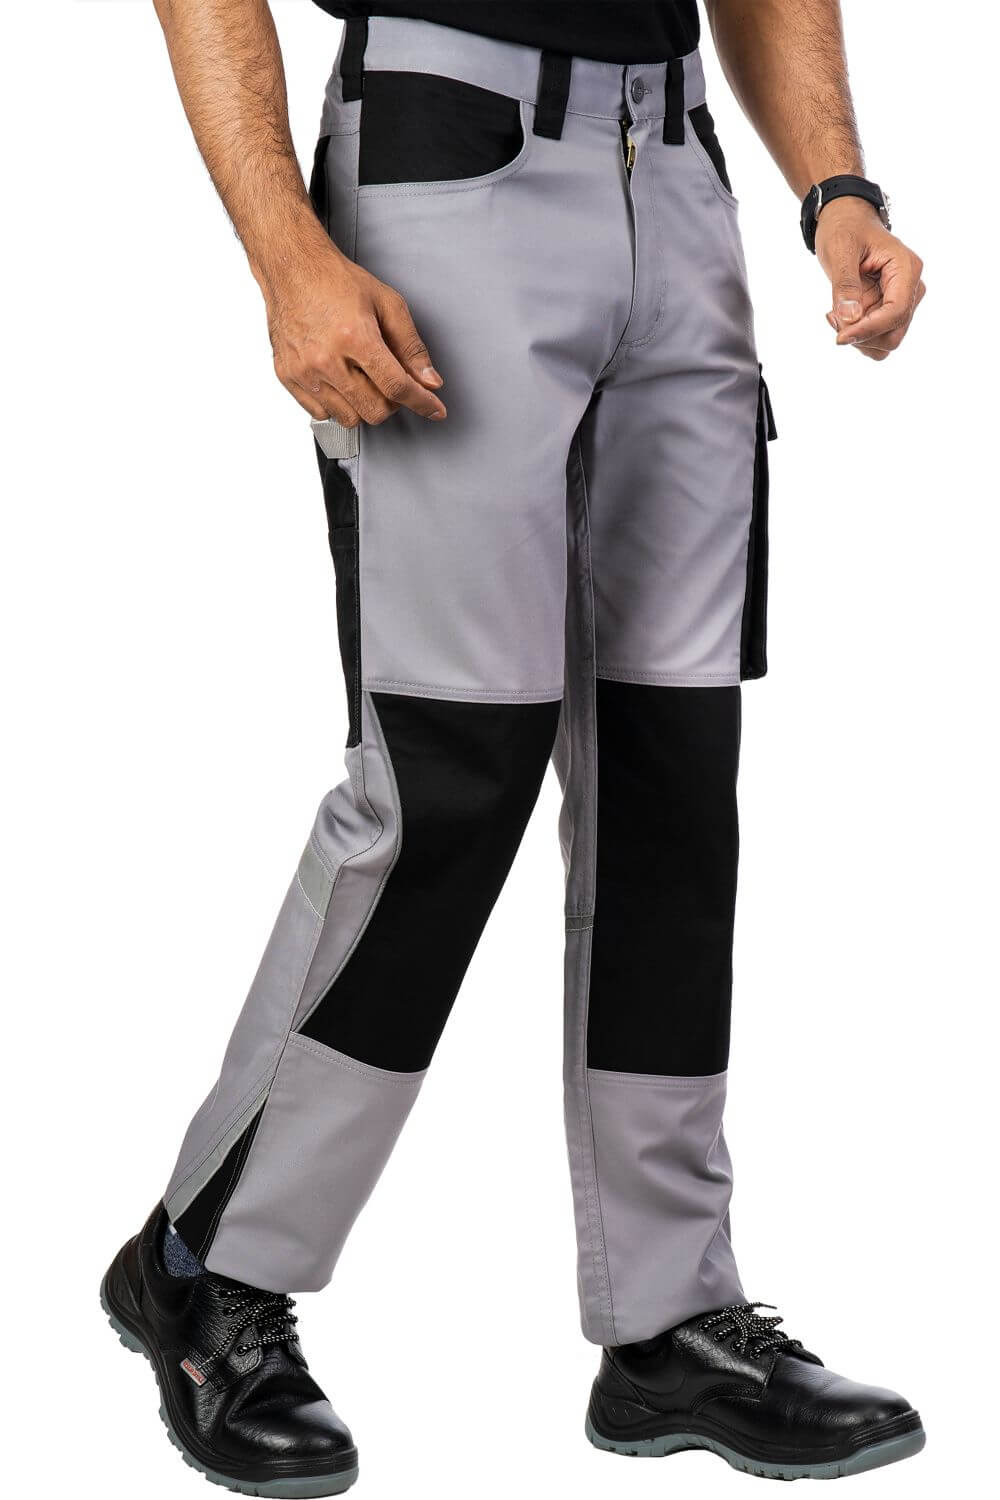 White Men's Pants Industrial Work Uniform Elastic Waistband REED Flex 820P  | eBay